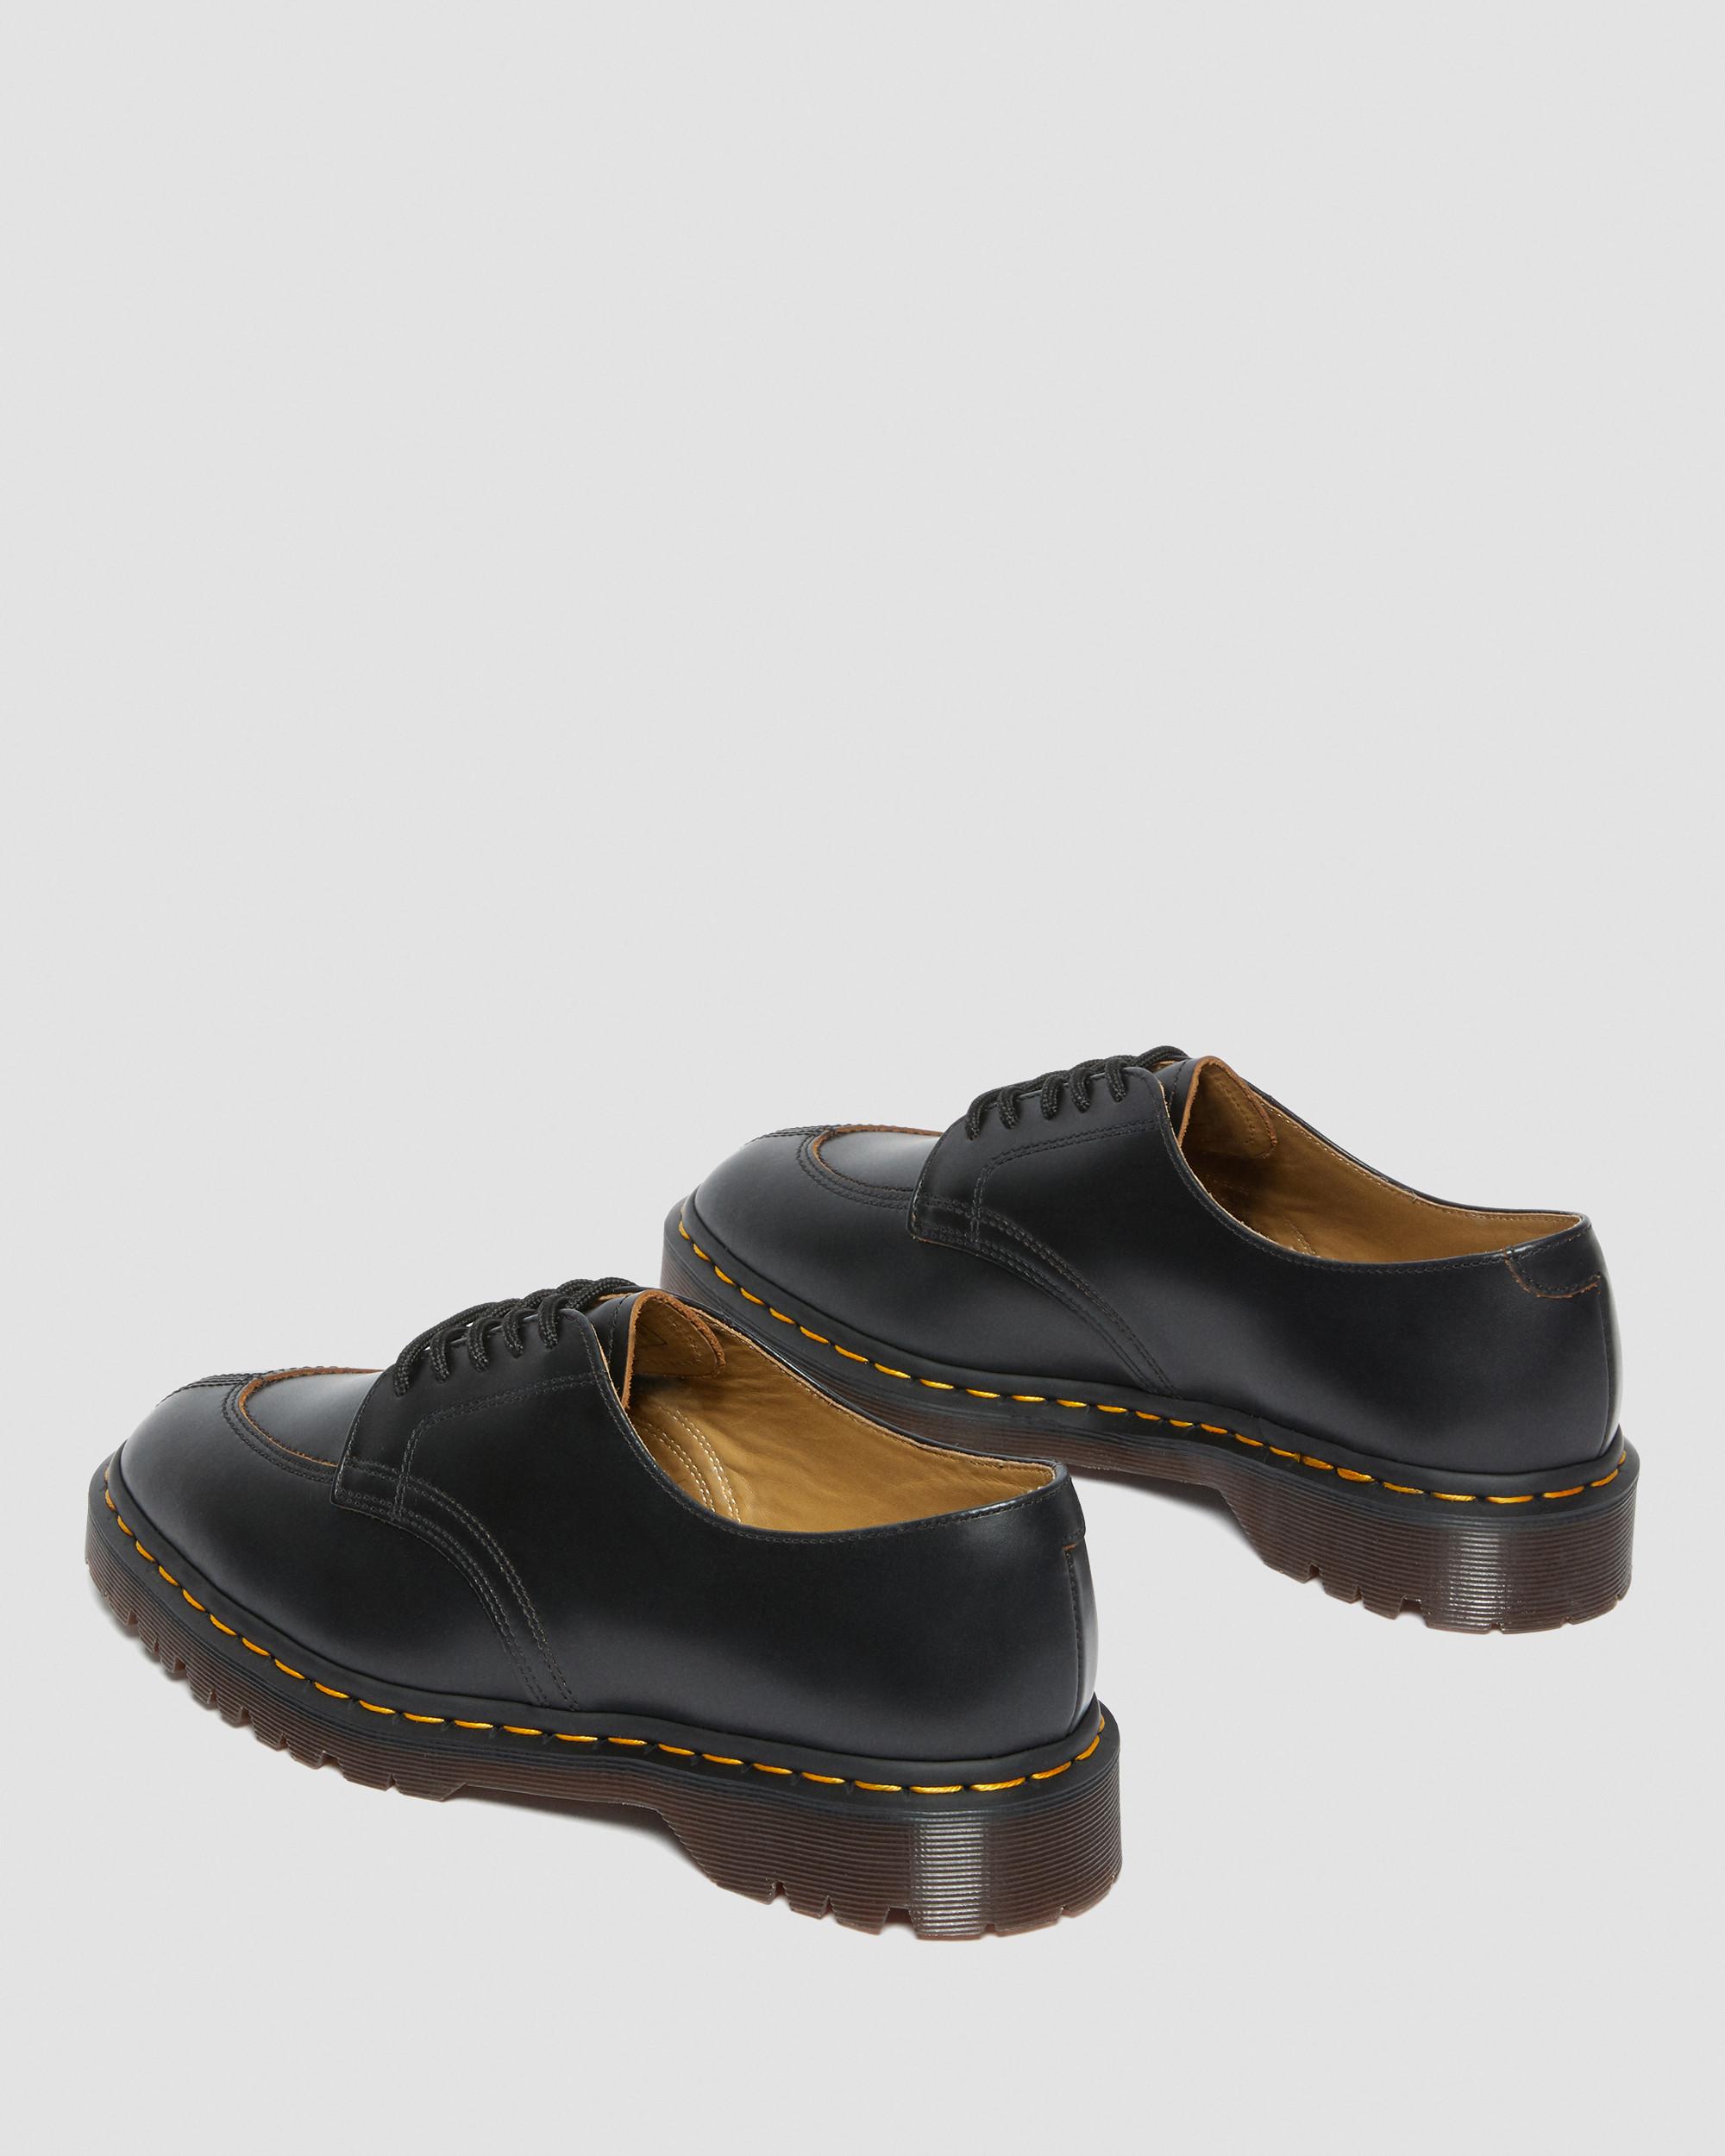 DR MARTENS 2046 Vintage Smooth Leather Oxford Shoes